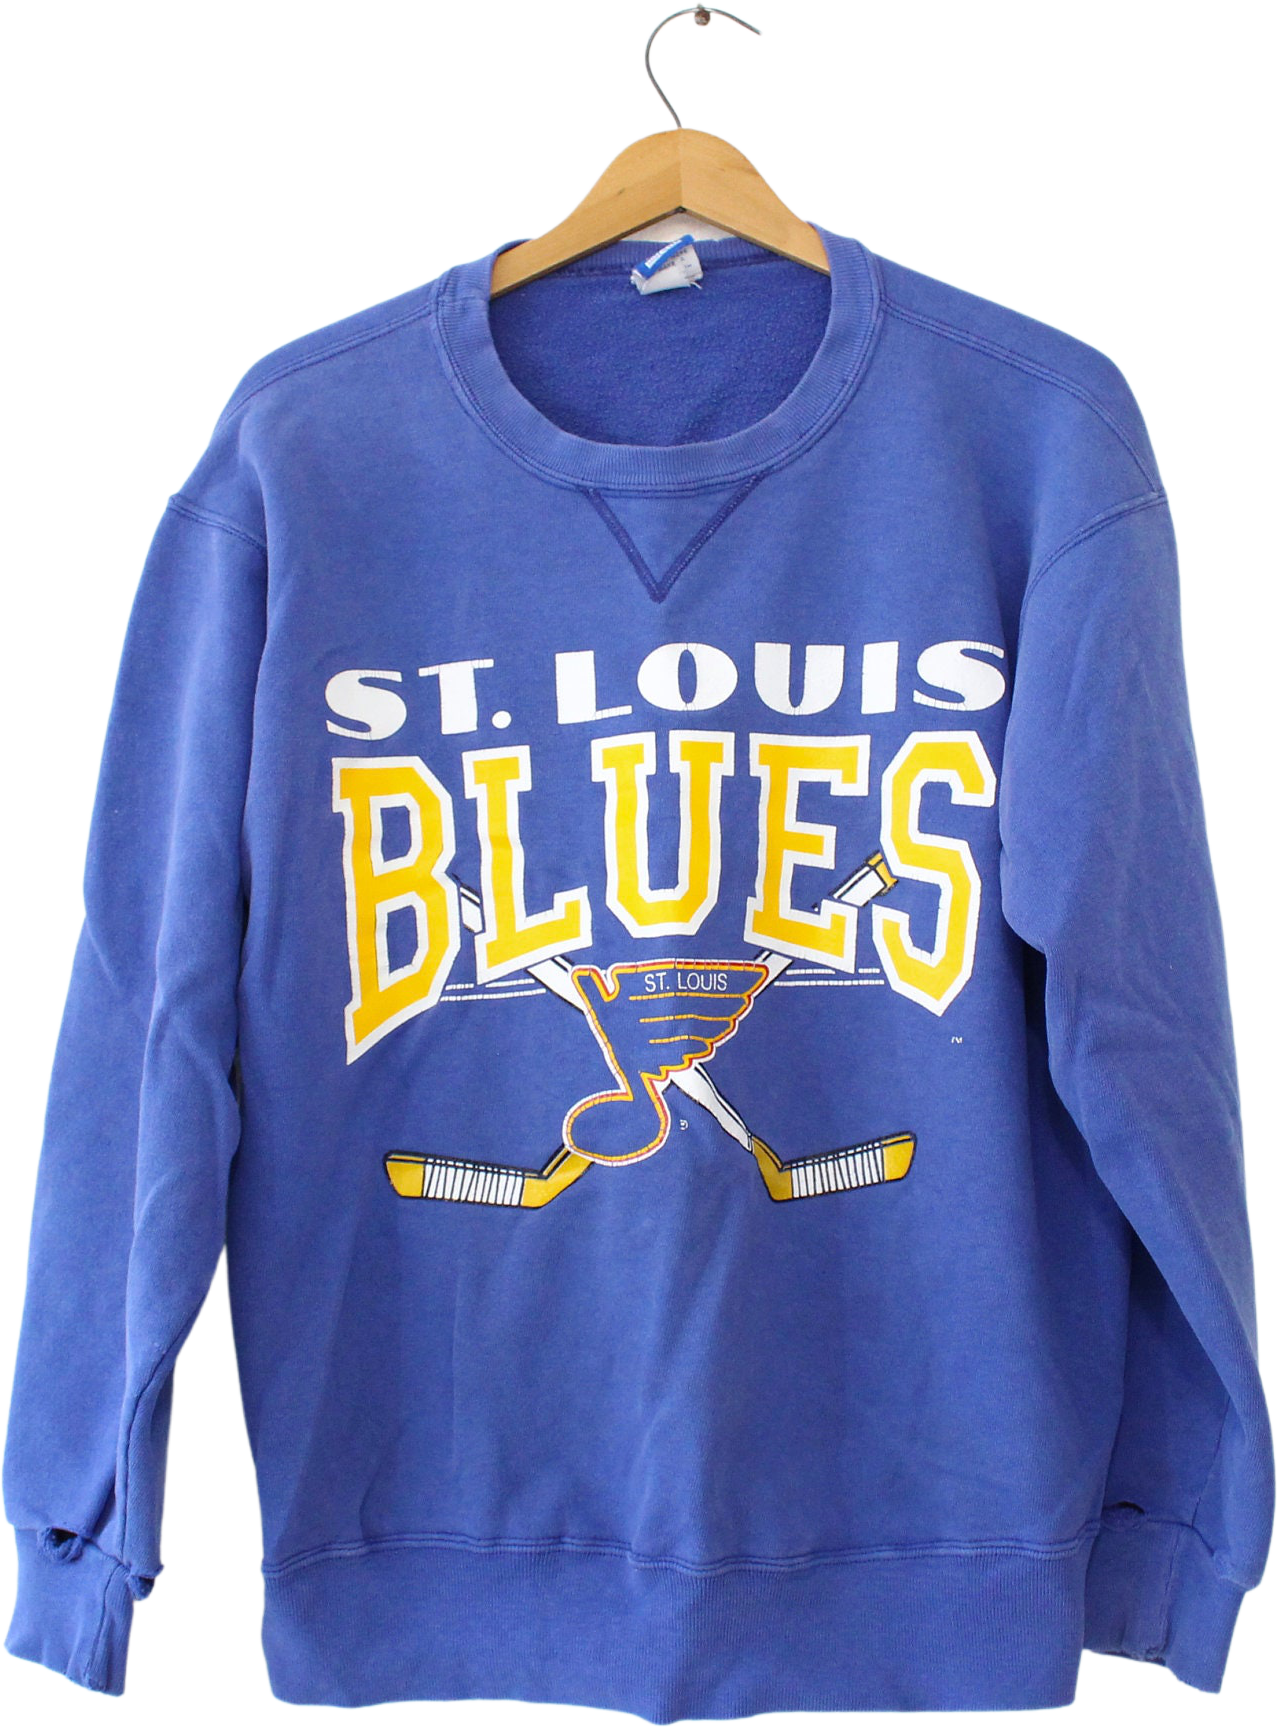 Vintage 90s St. Louis Blues NHL Hockey Crewneck Sweatshirt Blue Size Medium